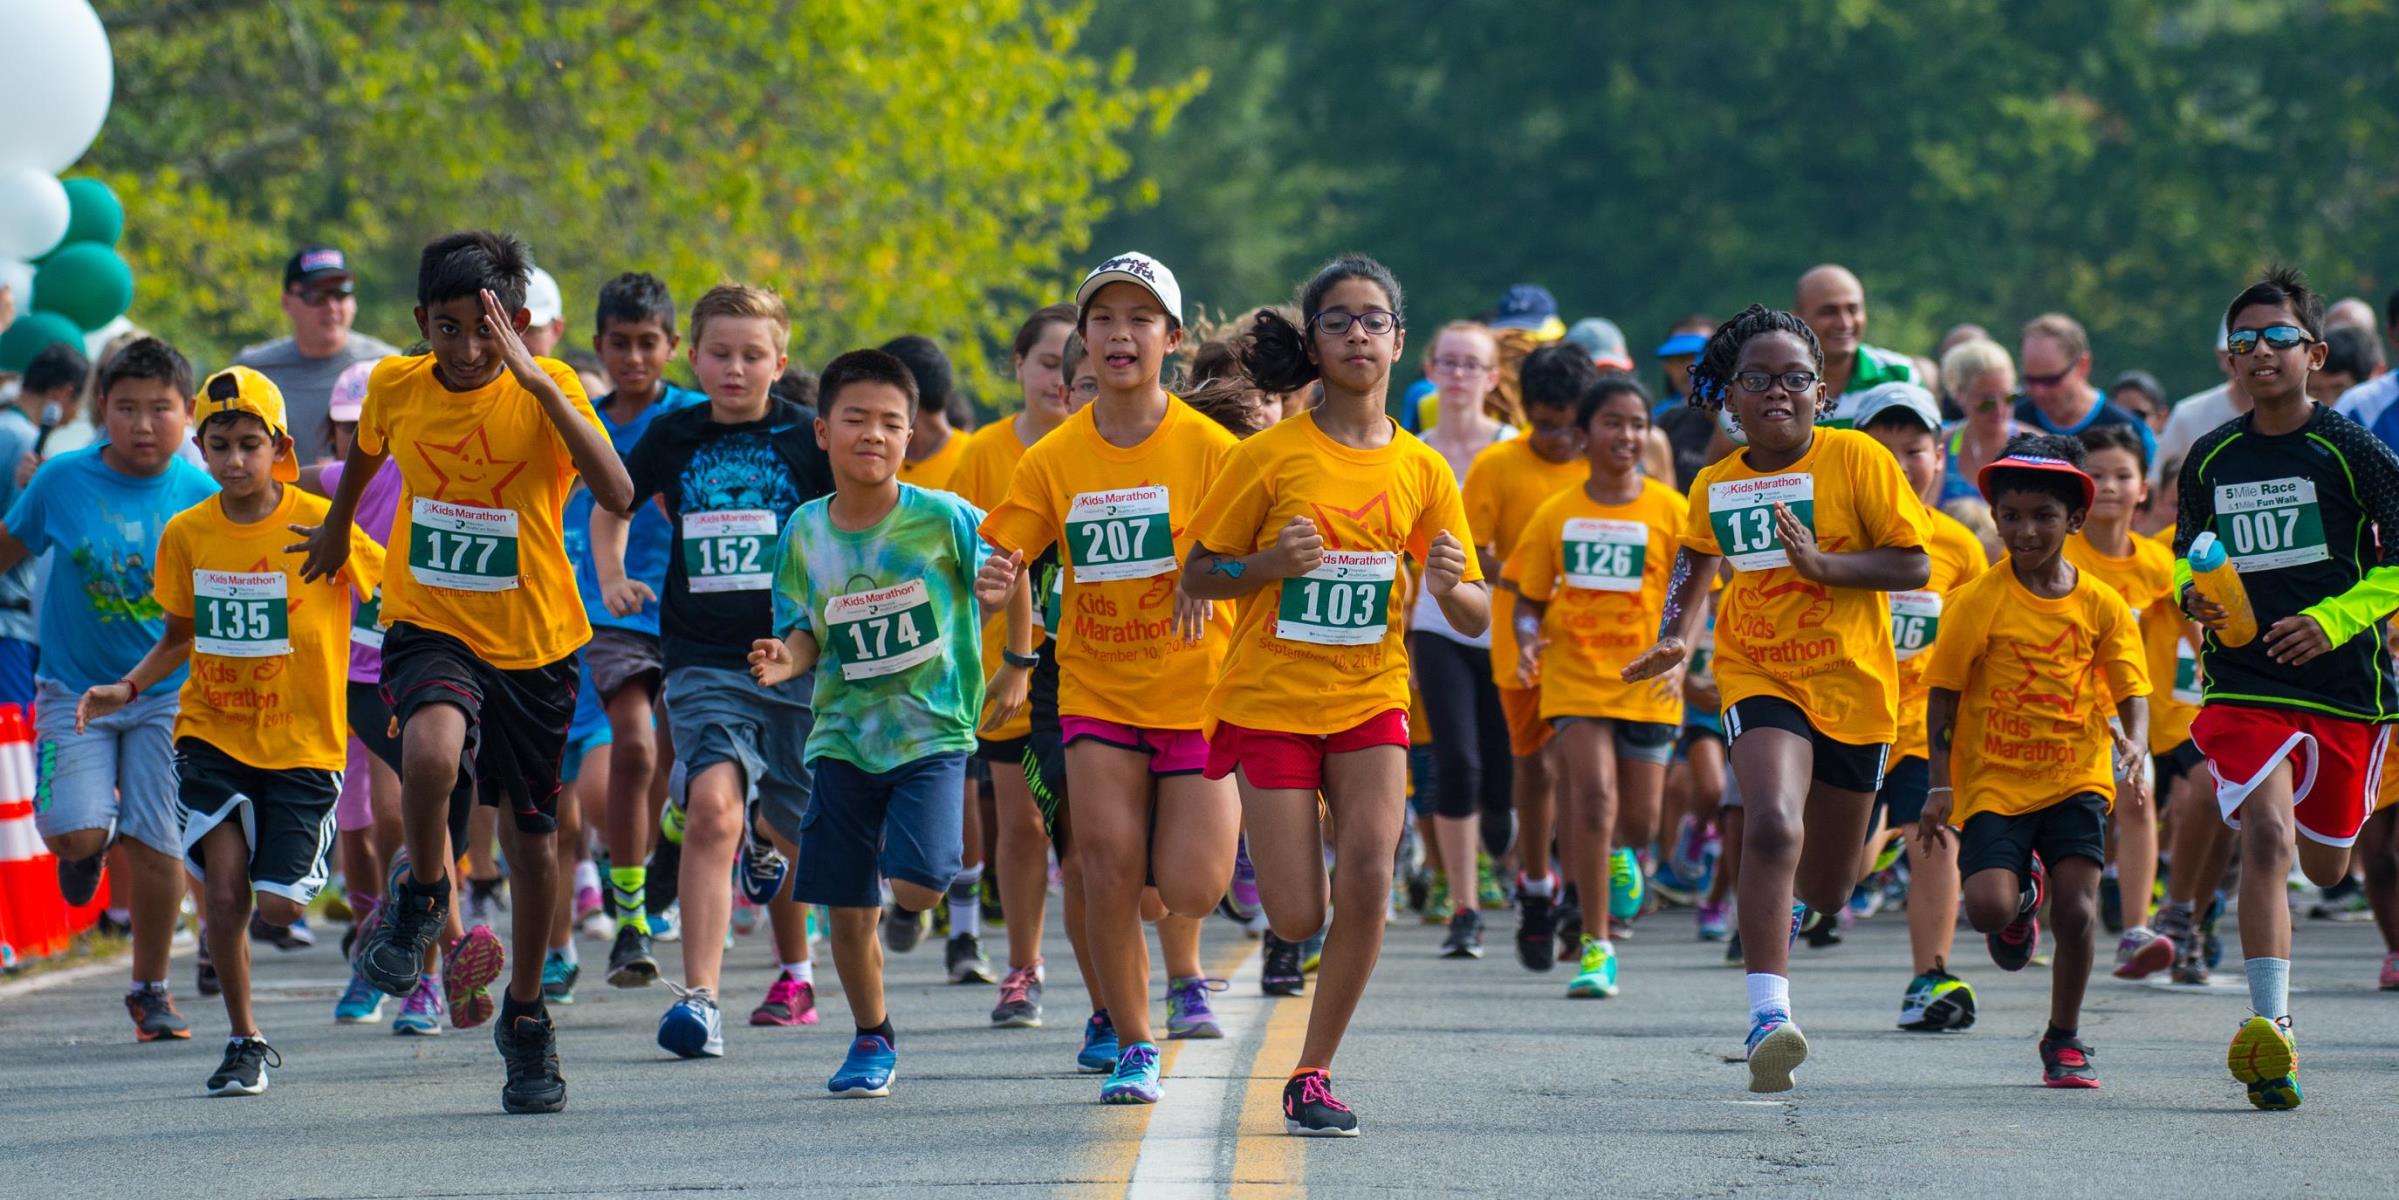 Registration for Kids Marathon Now Open